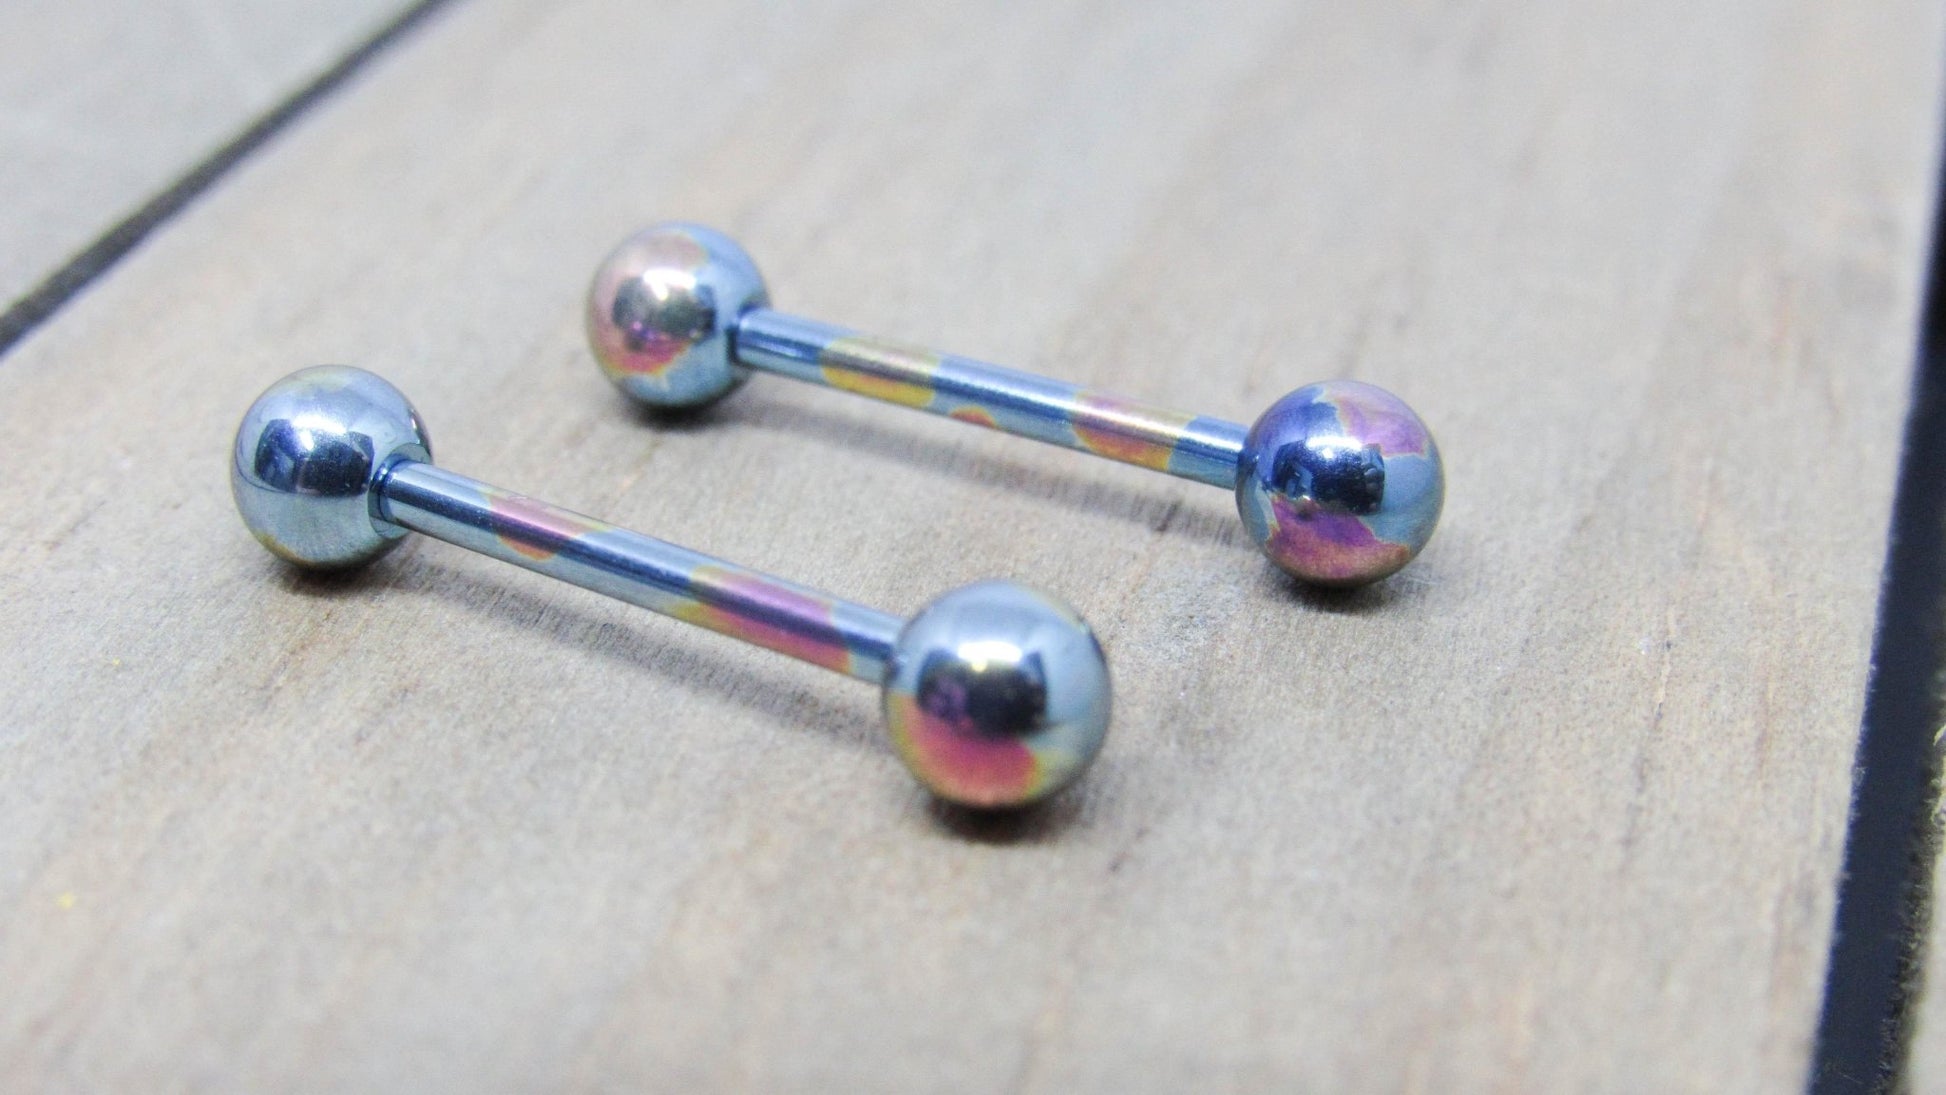 14g oilslick titanium nipple piercing barbell set internally threaded